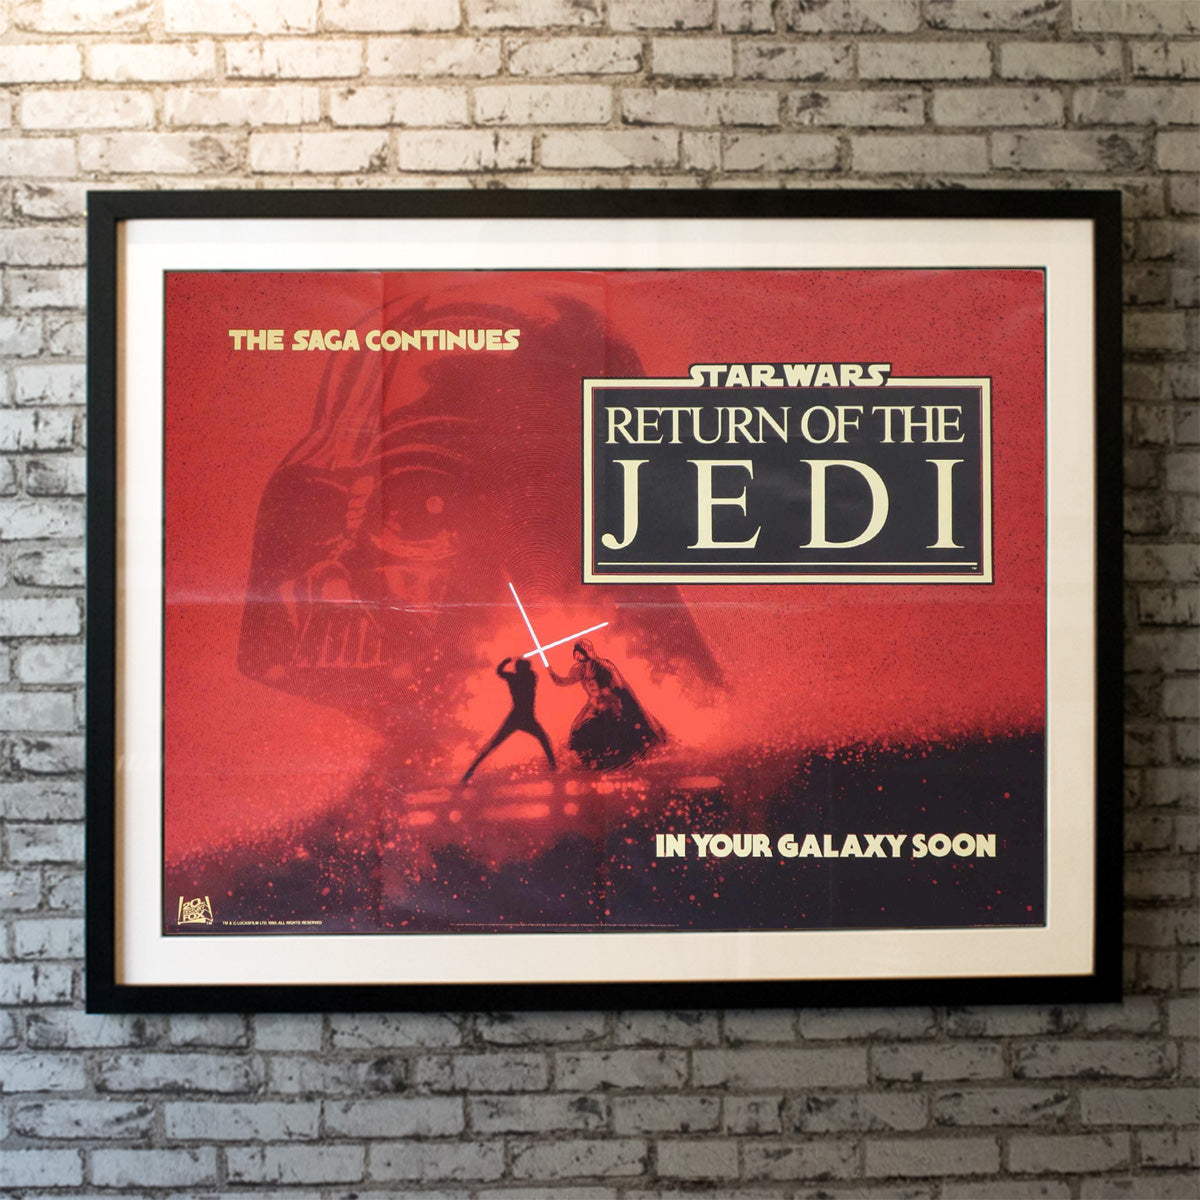 Return Of The Jedi (1983)